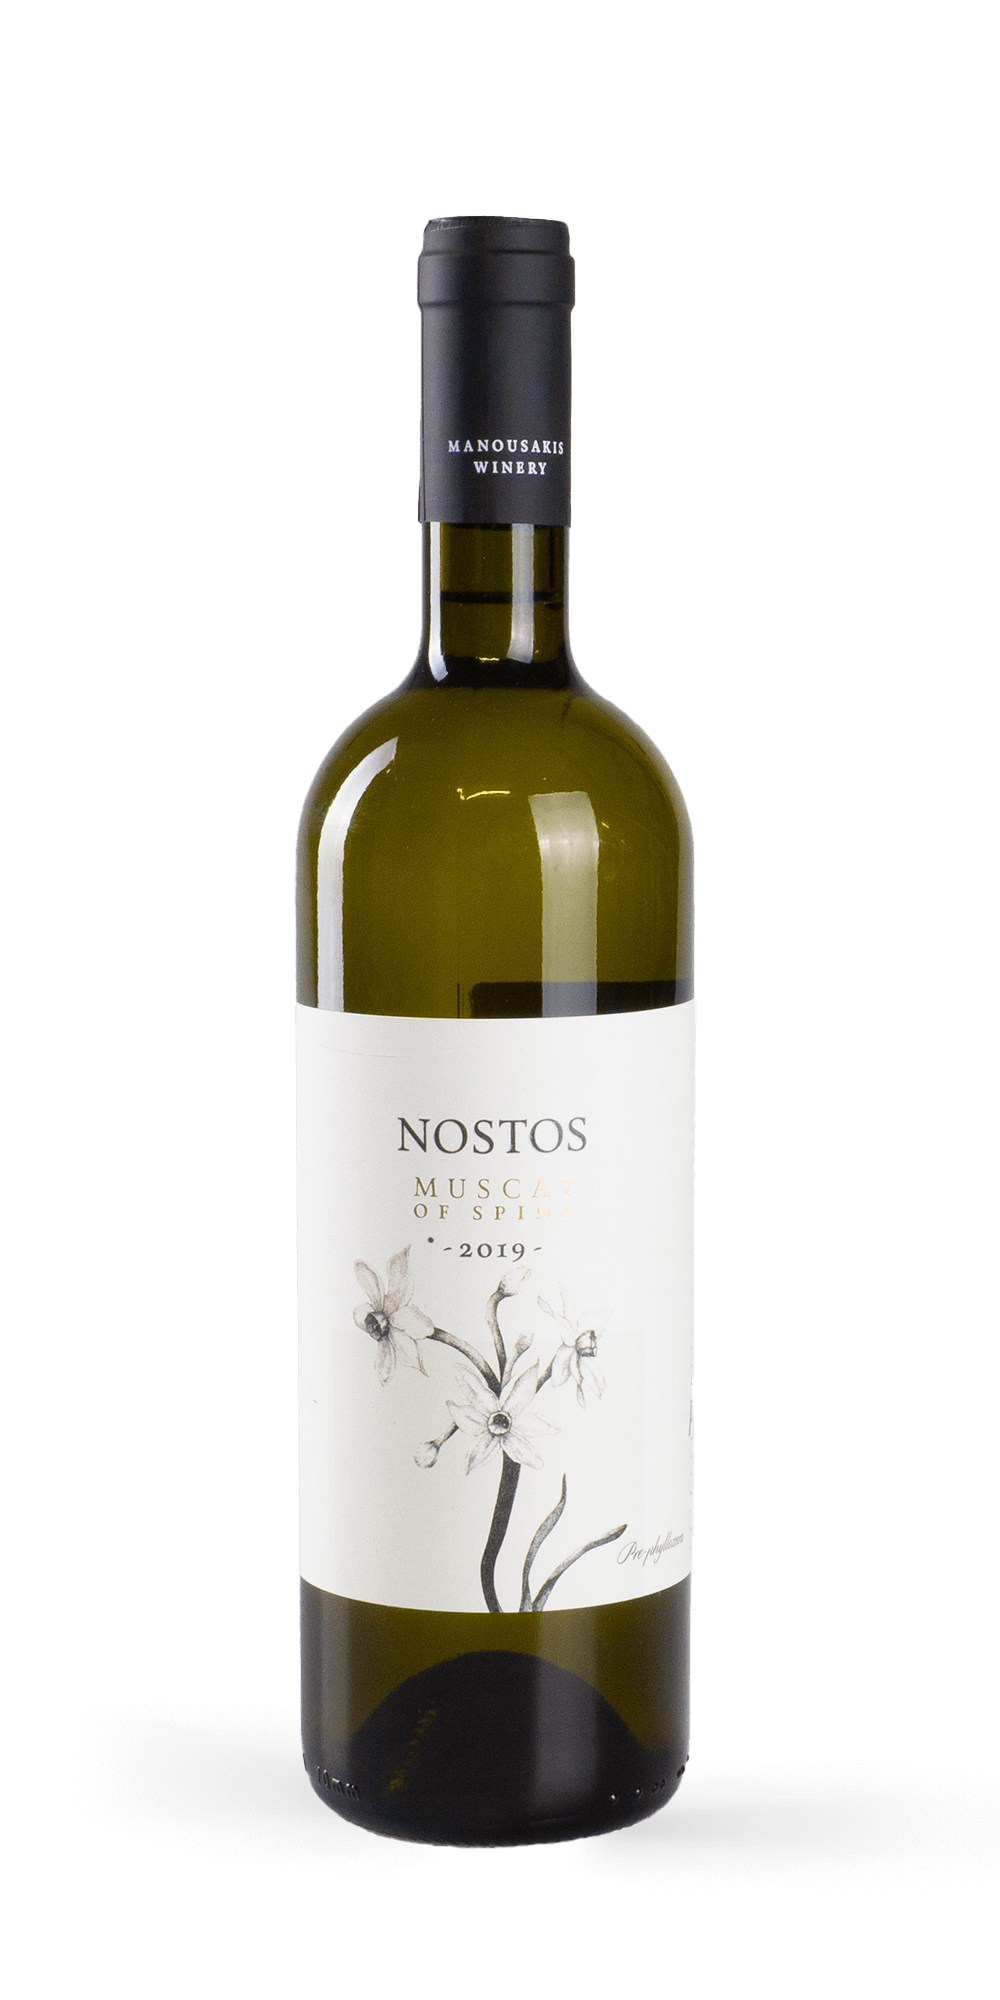 Nostos Muscat of Spina 2019 - Manousakis Winery